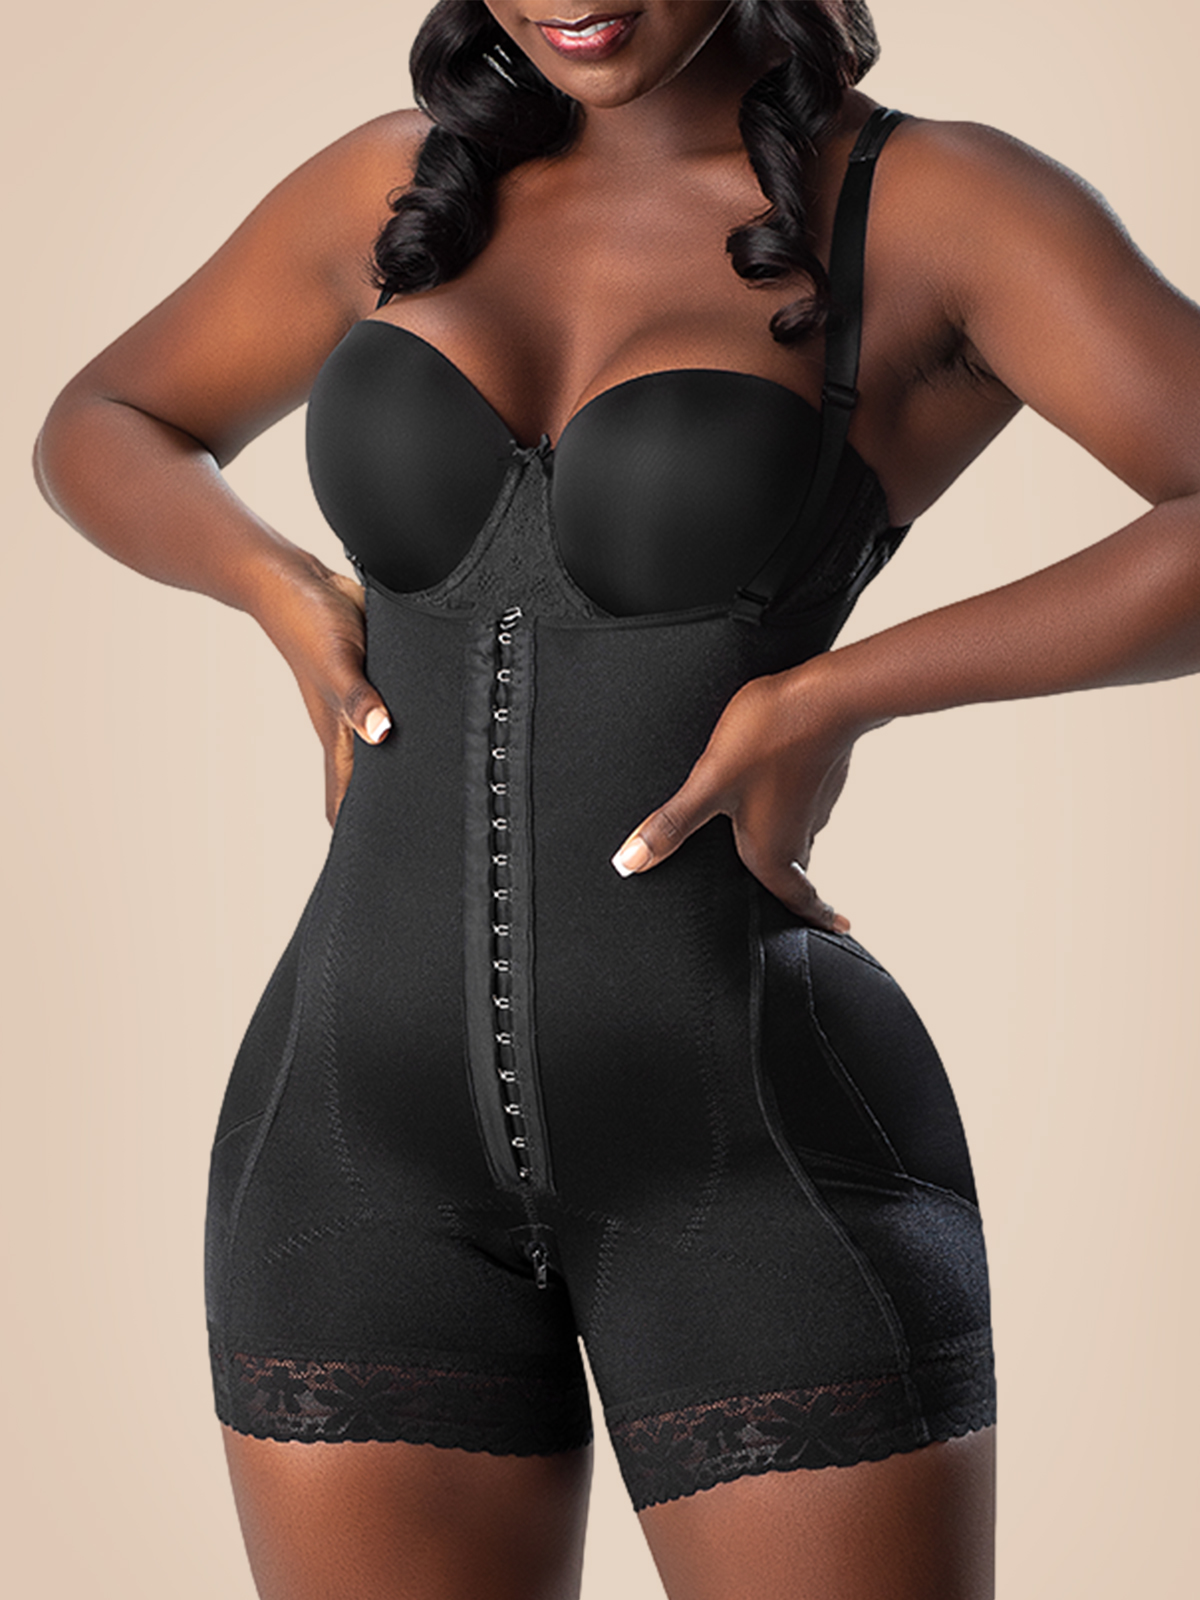 🍹🍹The perfect faja wear from 🔥chic-curve.com 🌴🌴Stylish